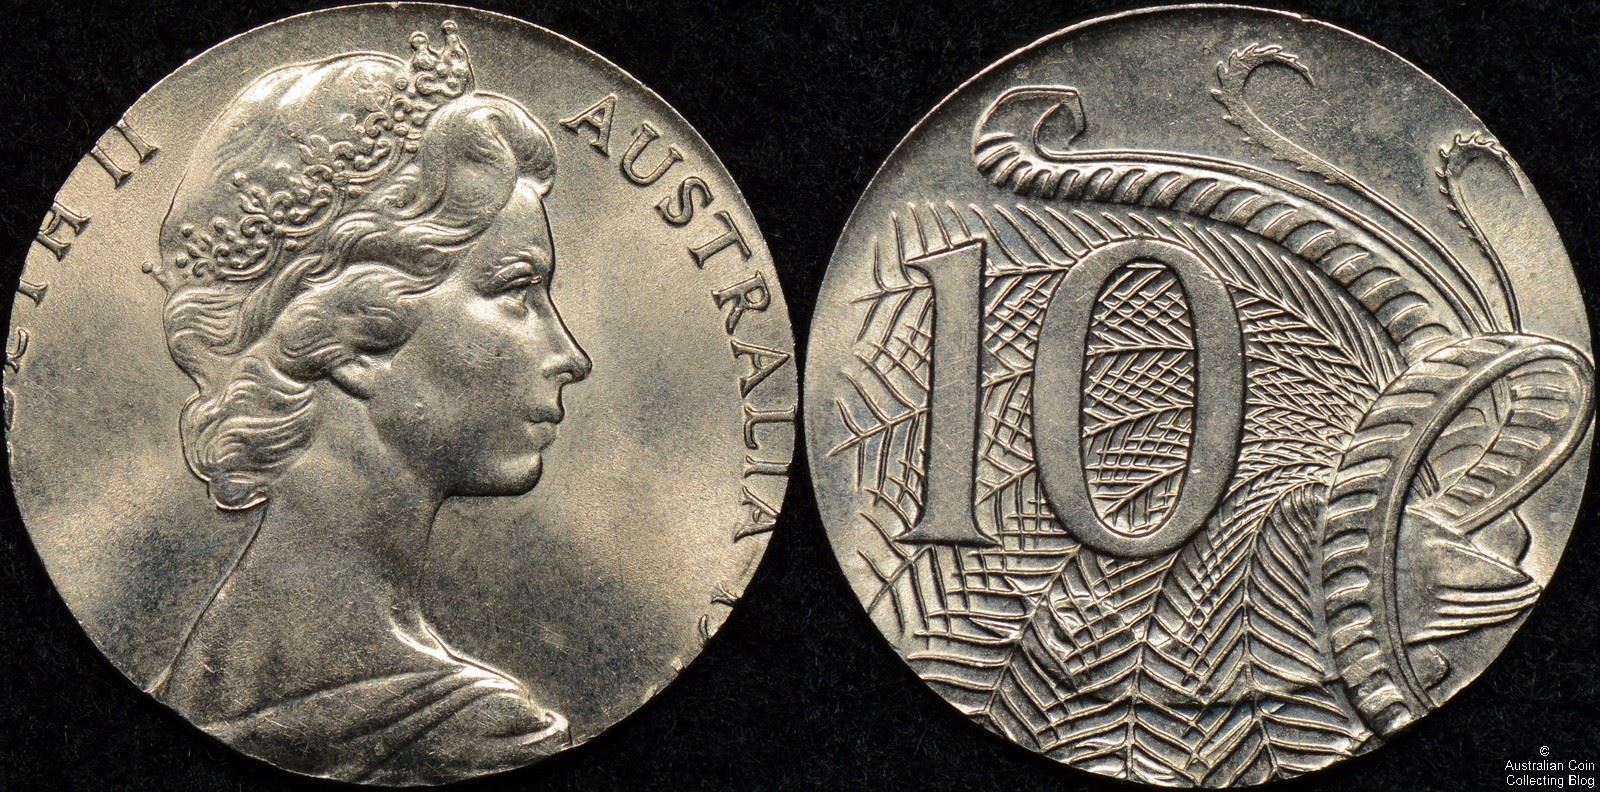 Australia 1979 10 Cent Struck on 5 Cent Planchet Error